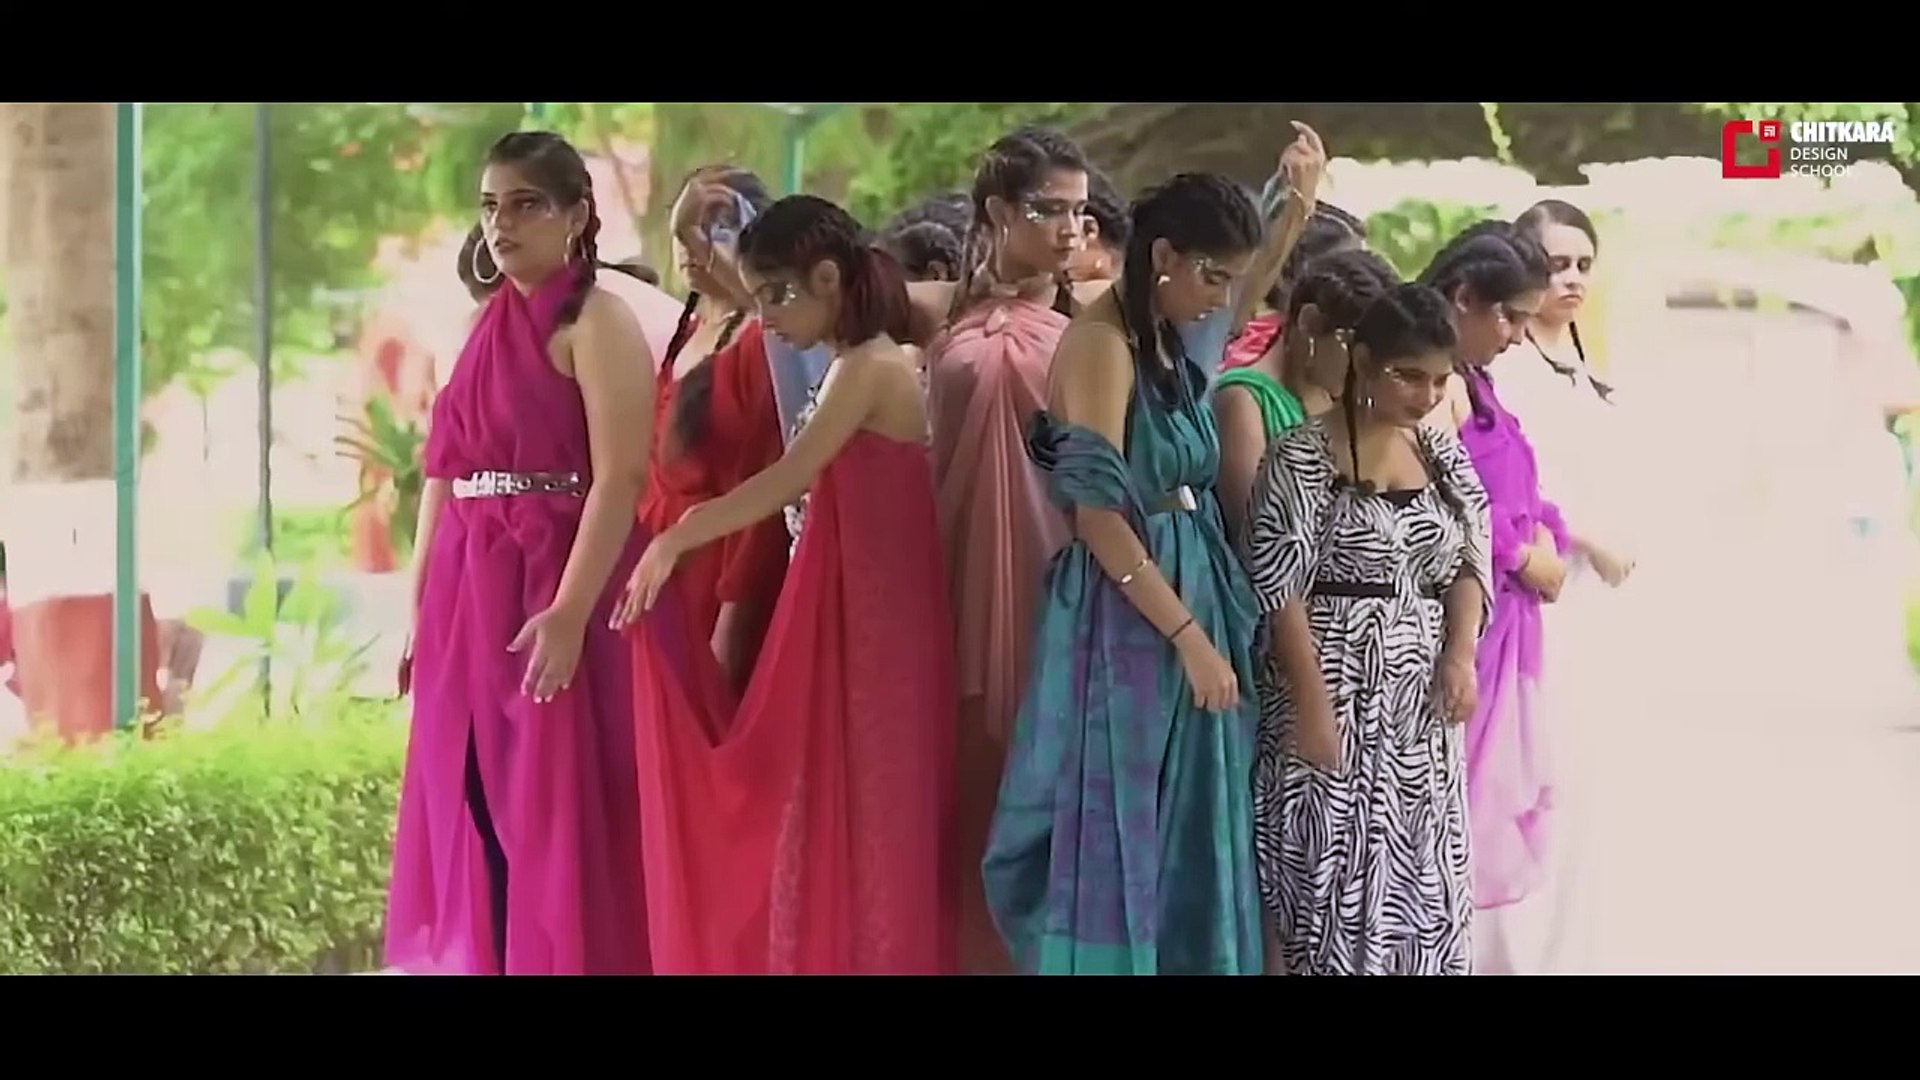 Chitkara University's Fashion Design Students Exploring Dreamy Patterns & Diverse Silhouett